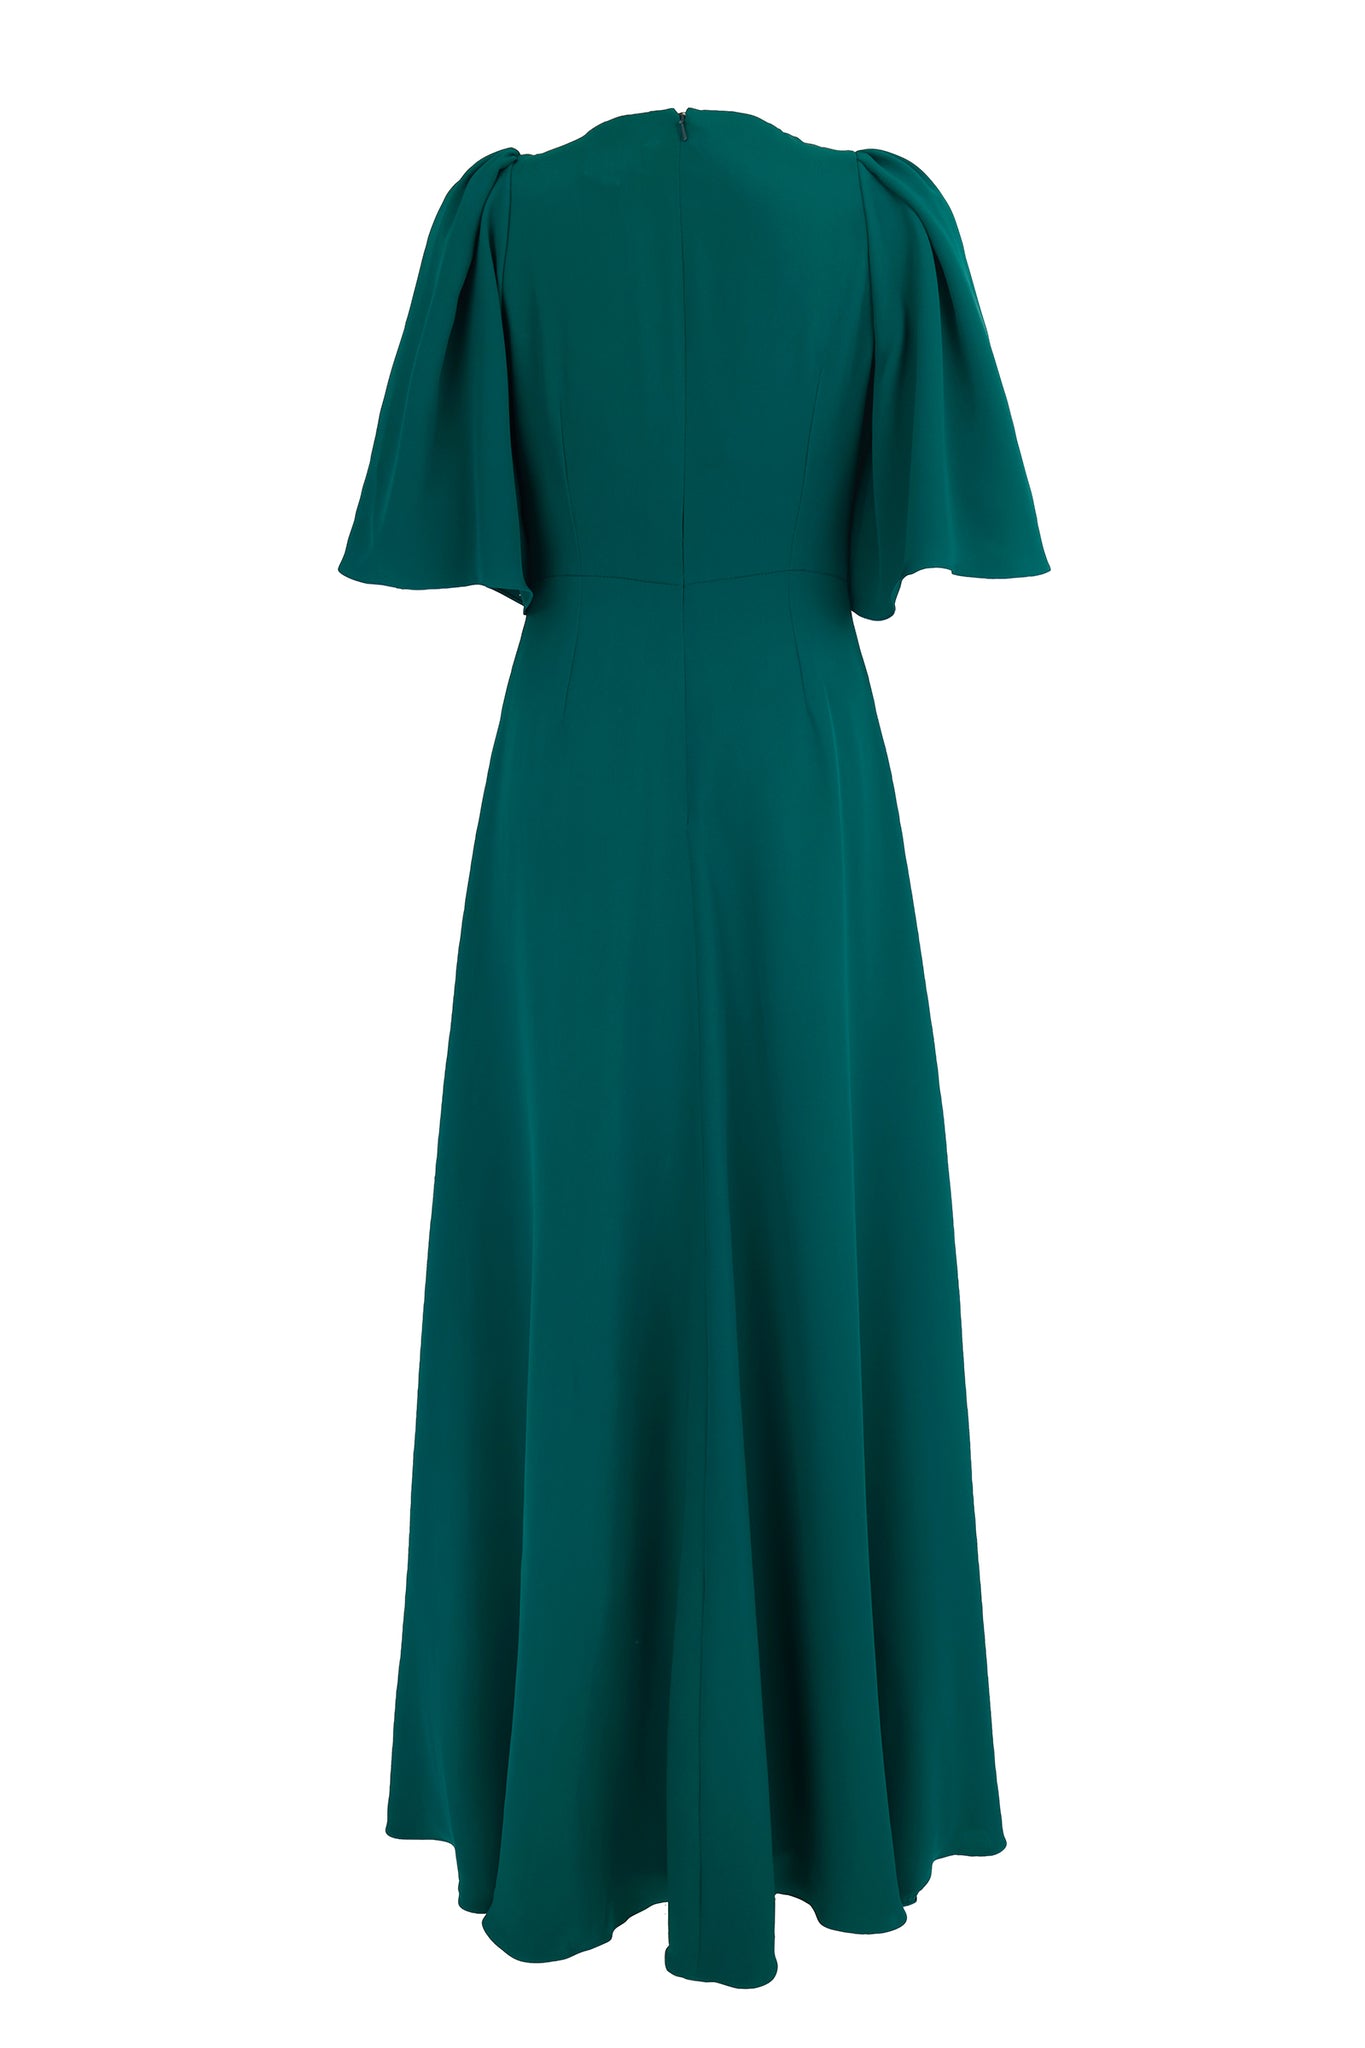 Suzannah London | Phoenix Gown | Jade Silk Crepe